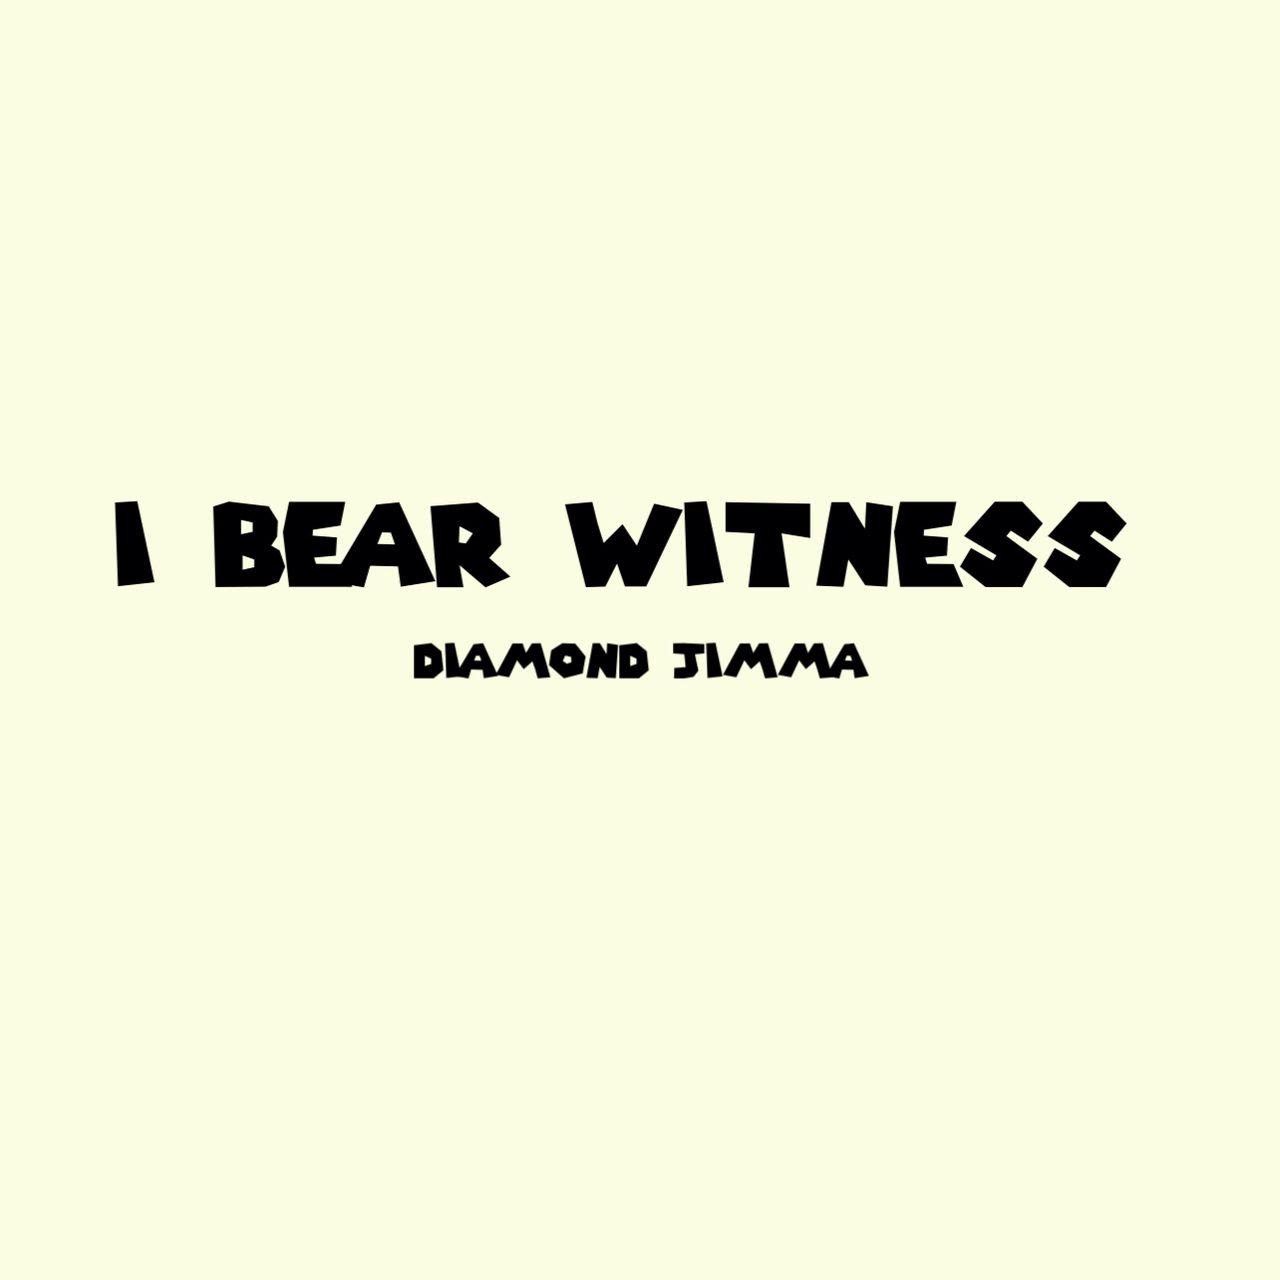 Diamond Jimma I Bear Witness